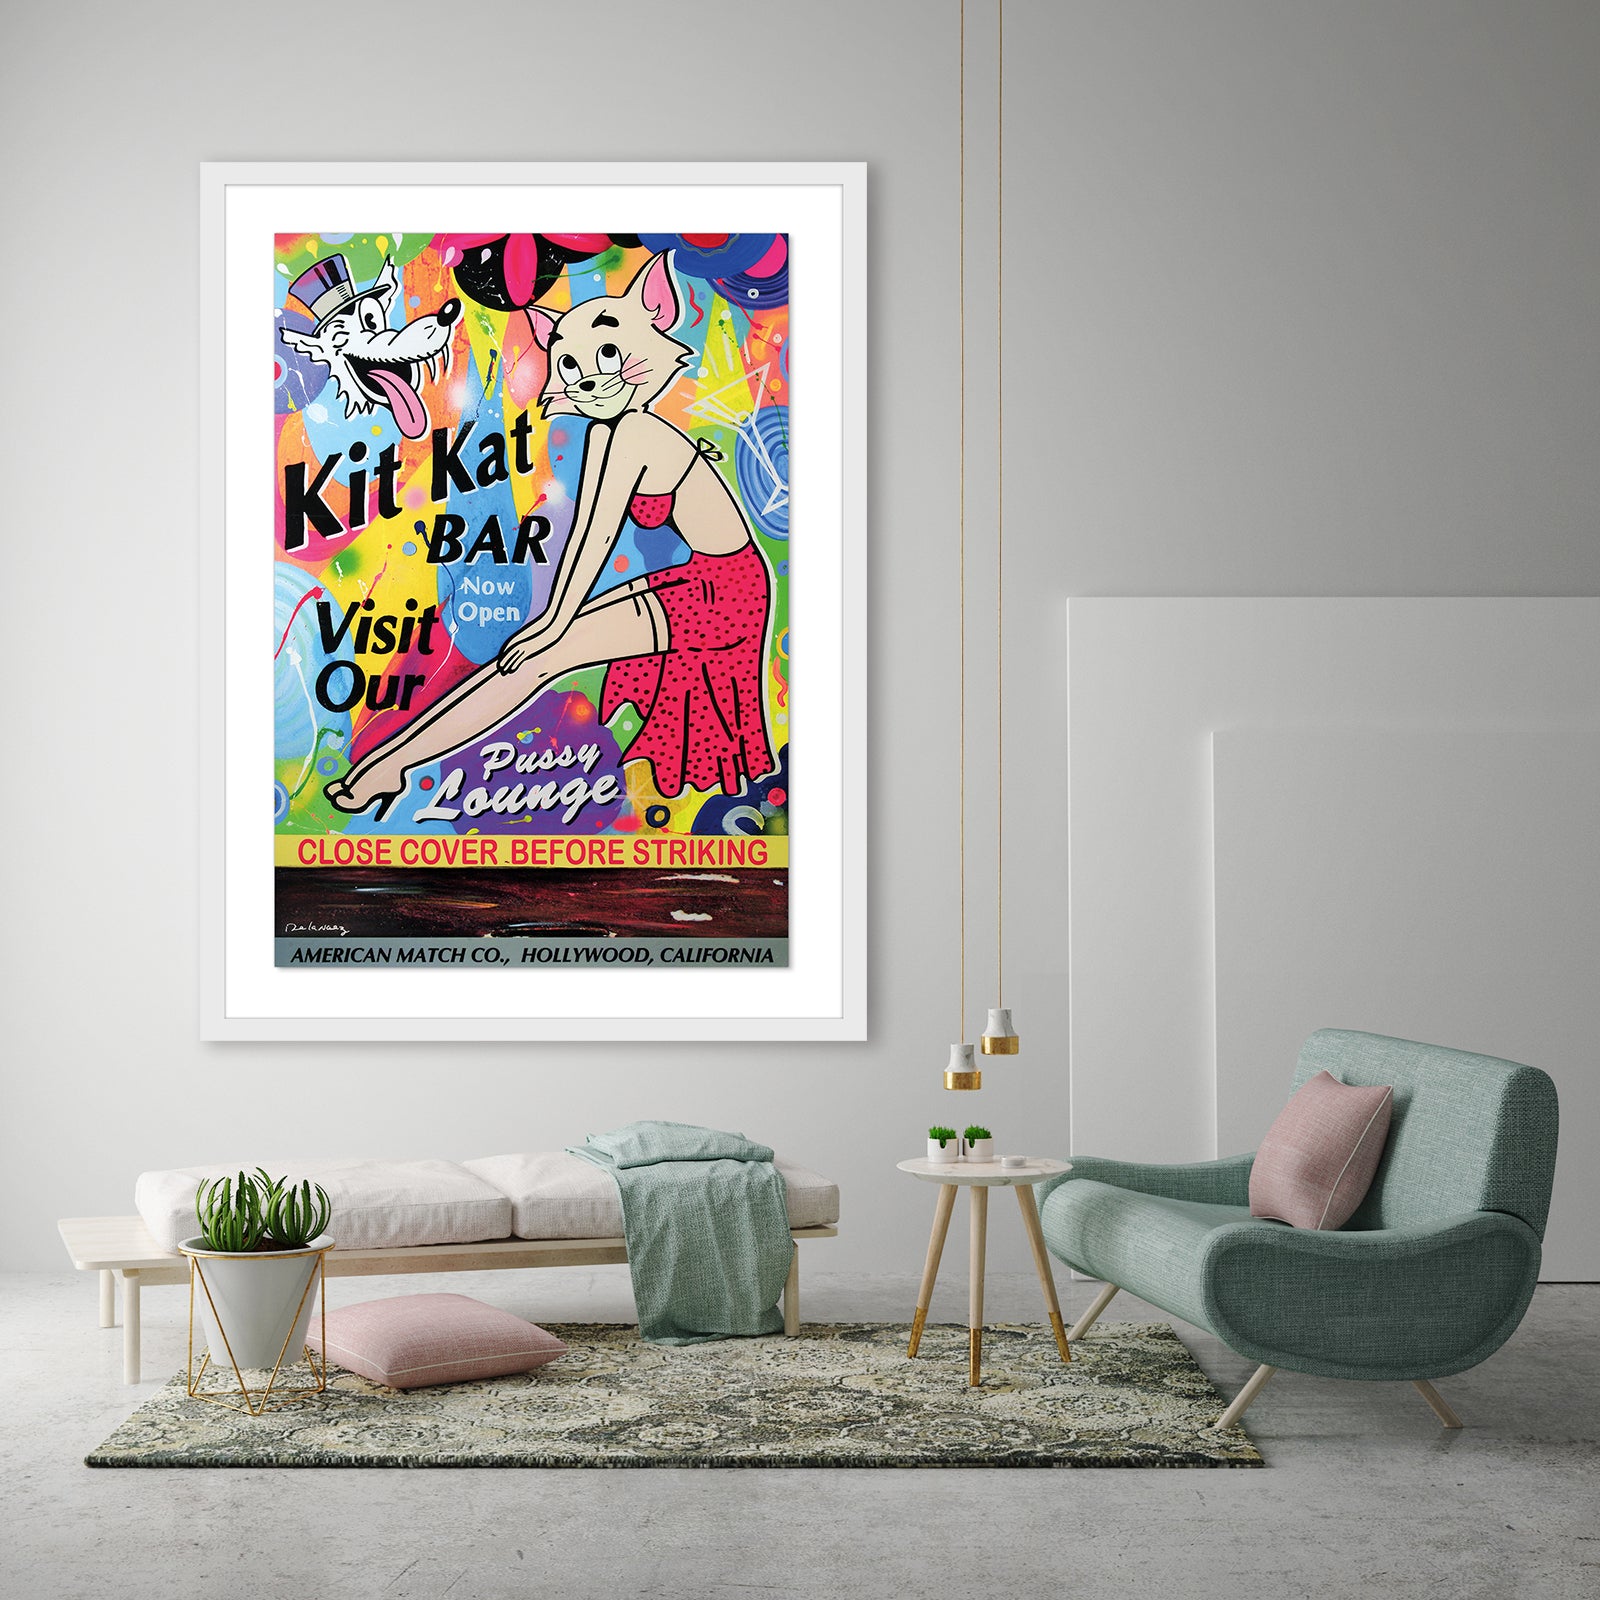 king of pop art nelson de la nuez kit kat club bar lounge kitty cat cocktail mixers martini pinup matchbook hollywood